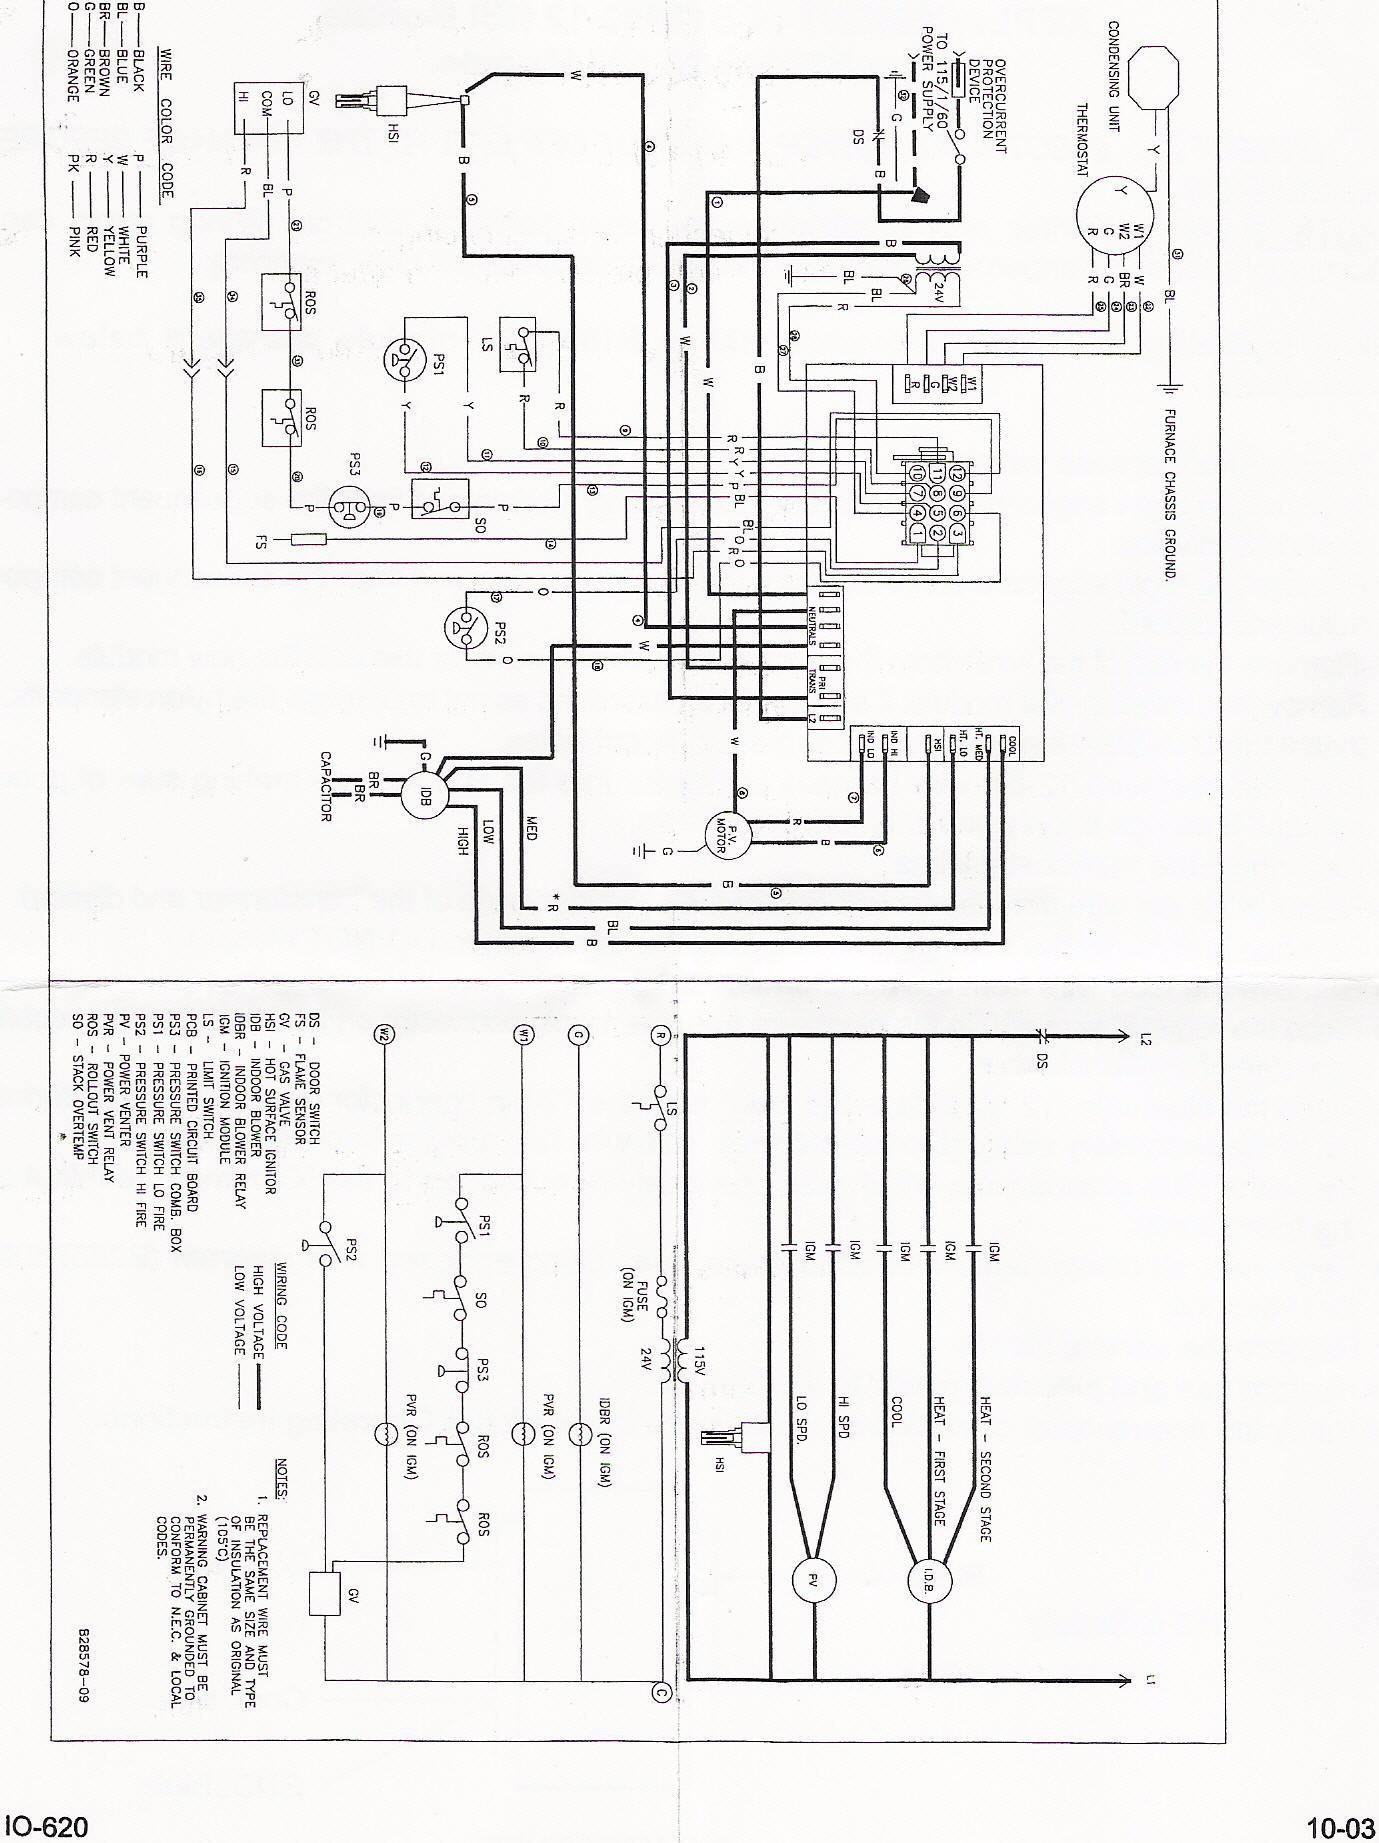 Gallery of Fresh Goodman Air Handler Wiring Diagram